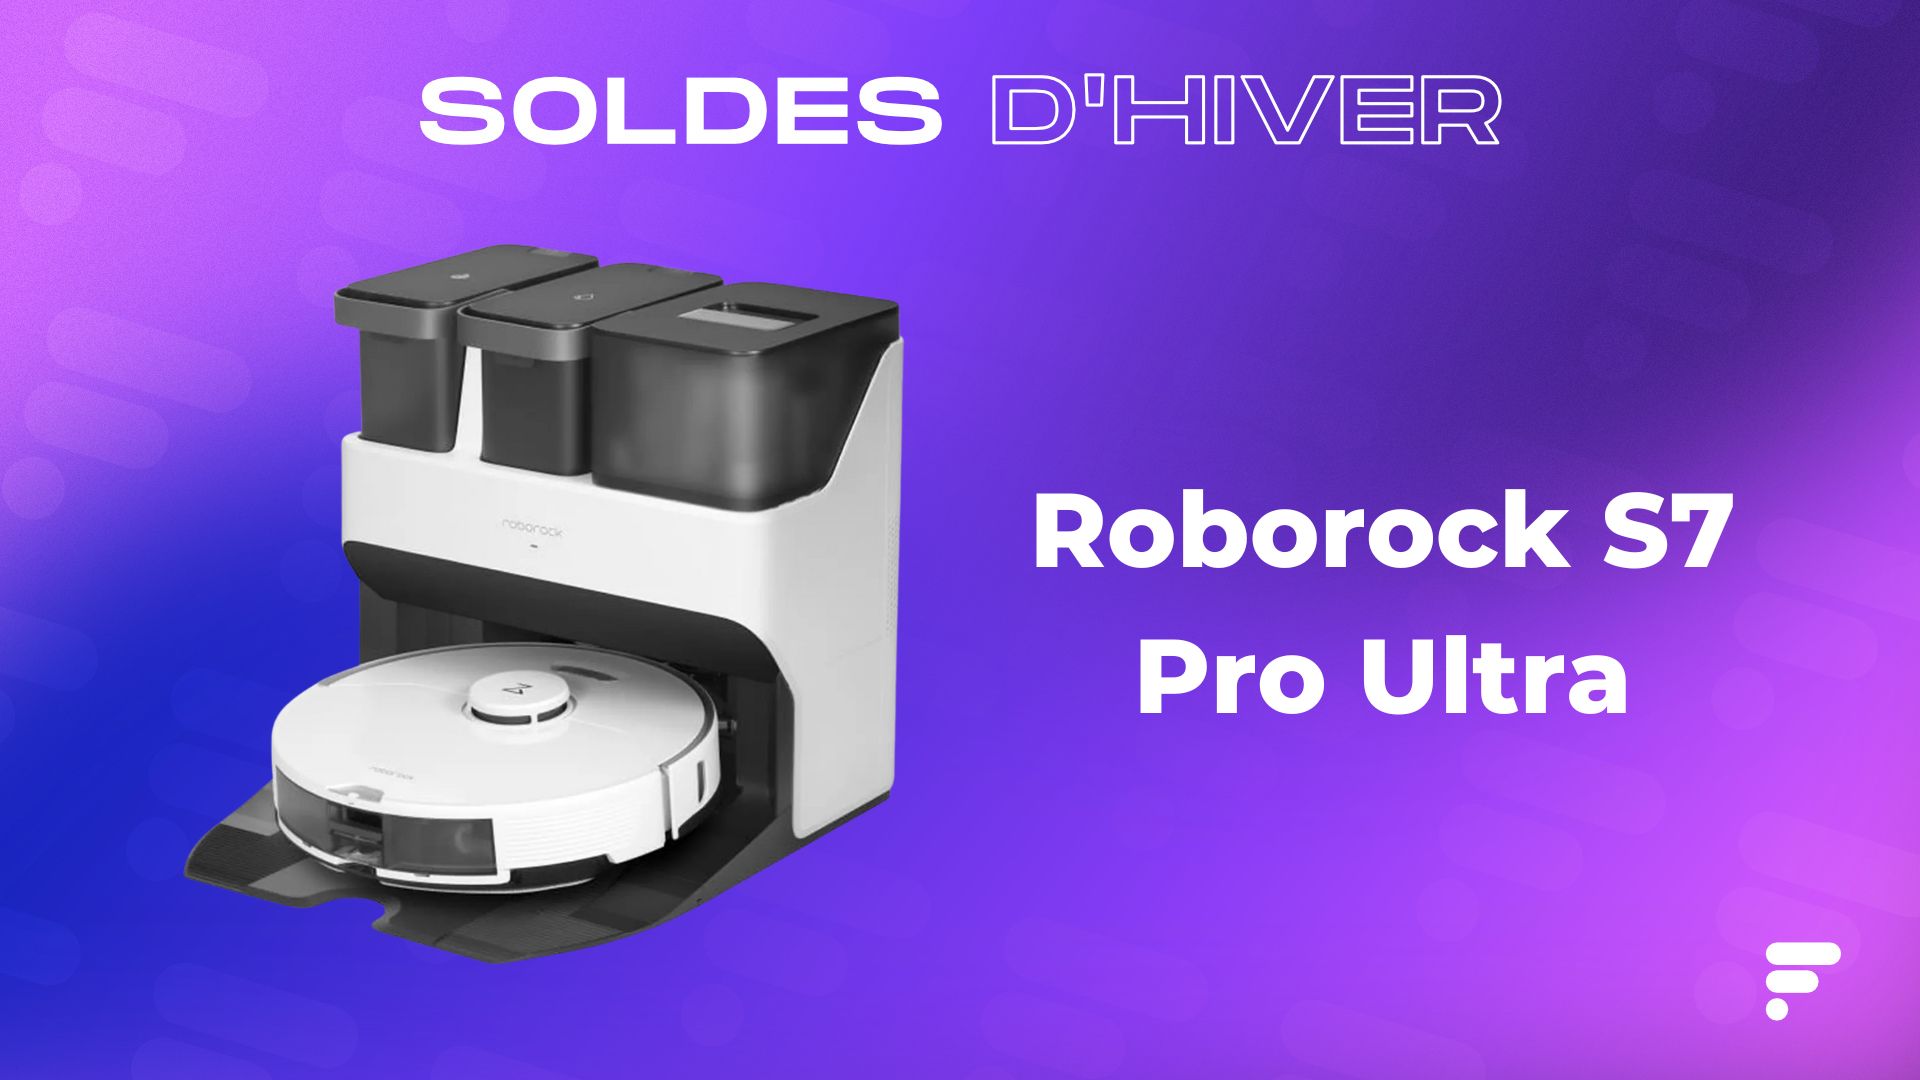 Aspirateur Roborock S7 Pro Ultra Robotique